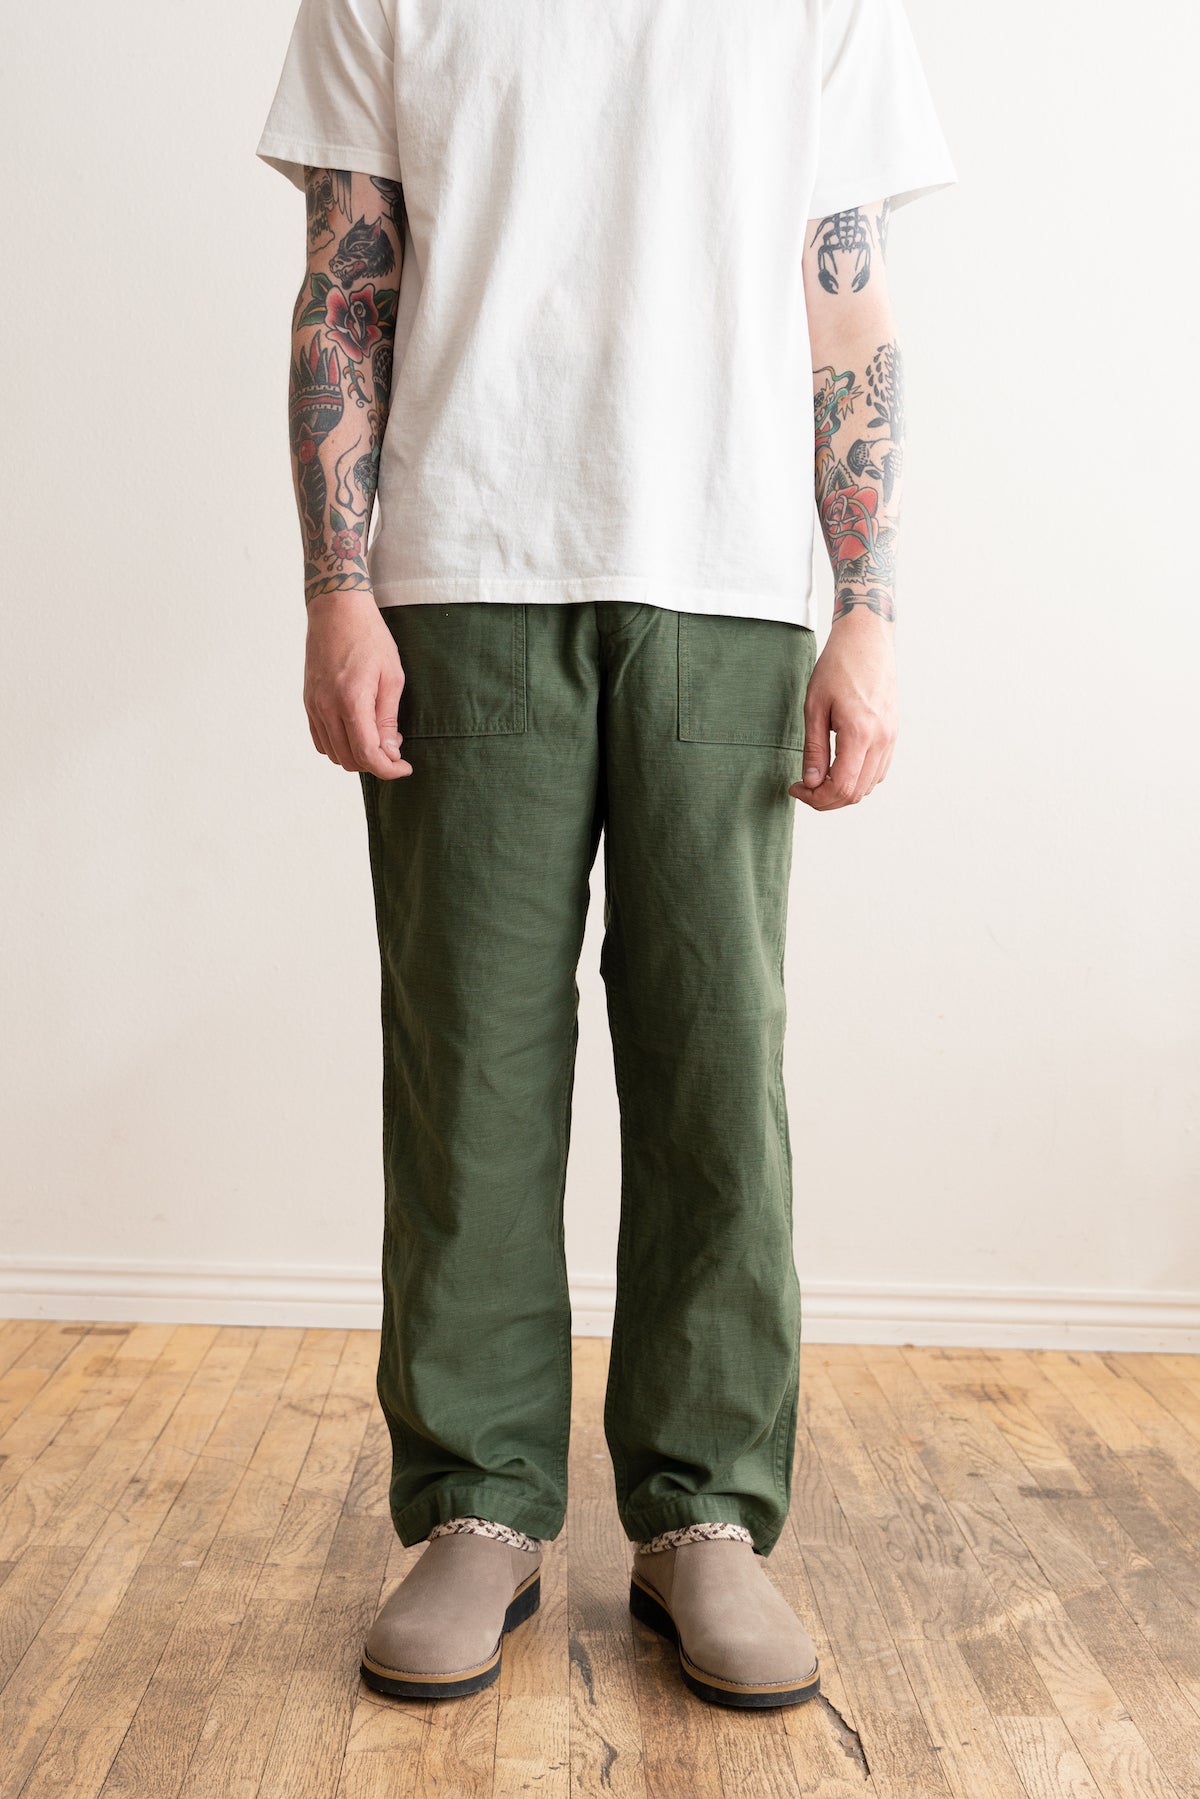 US Army Fatigue Pants - Green